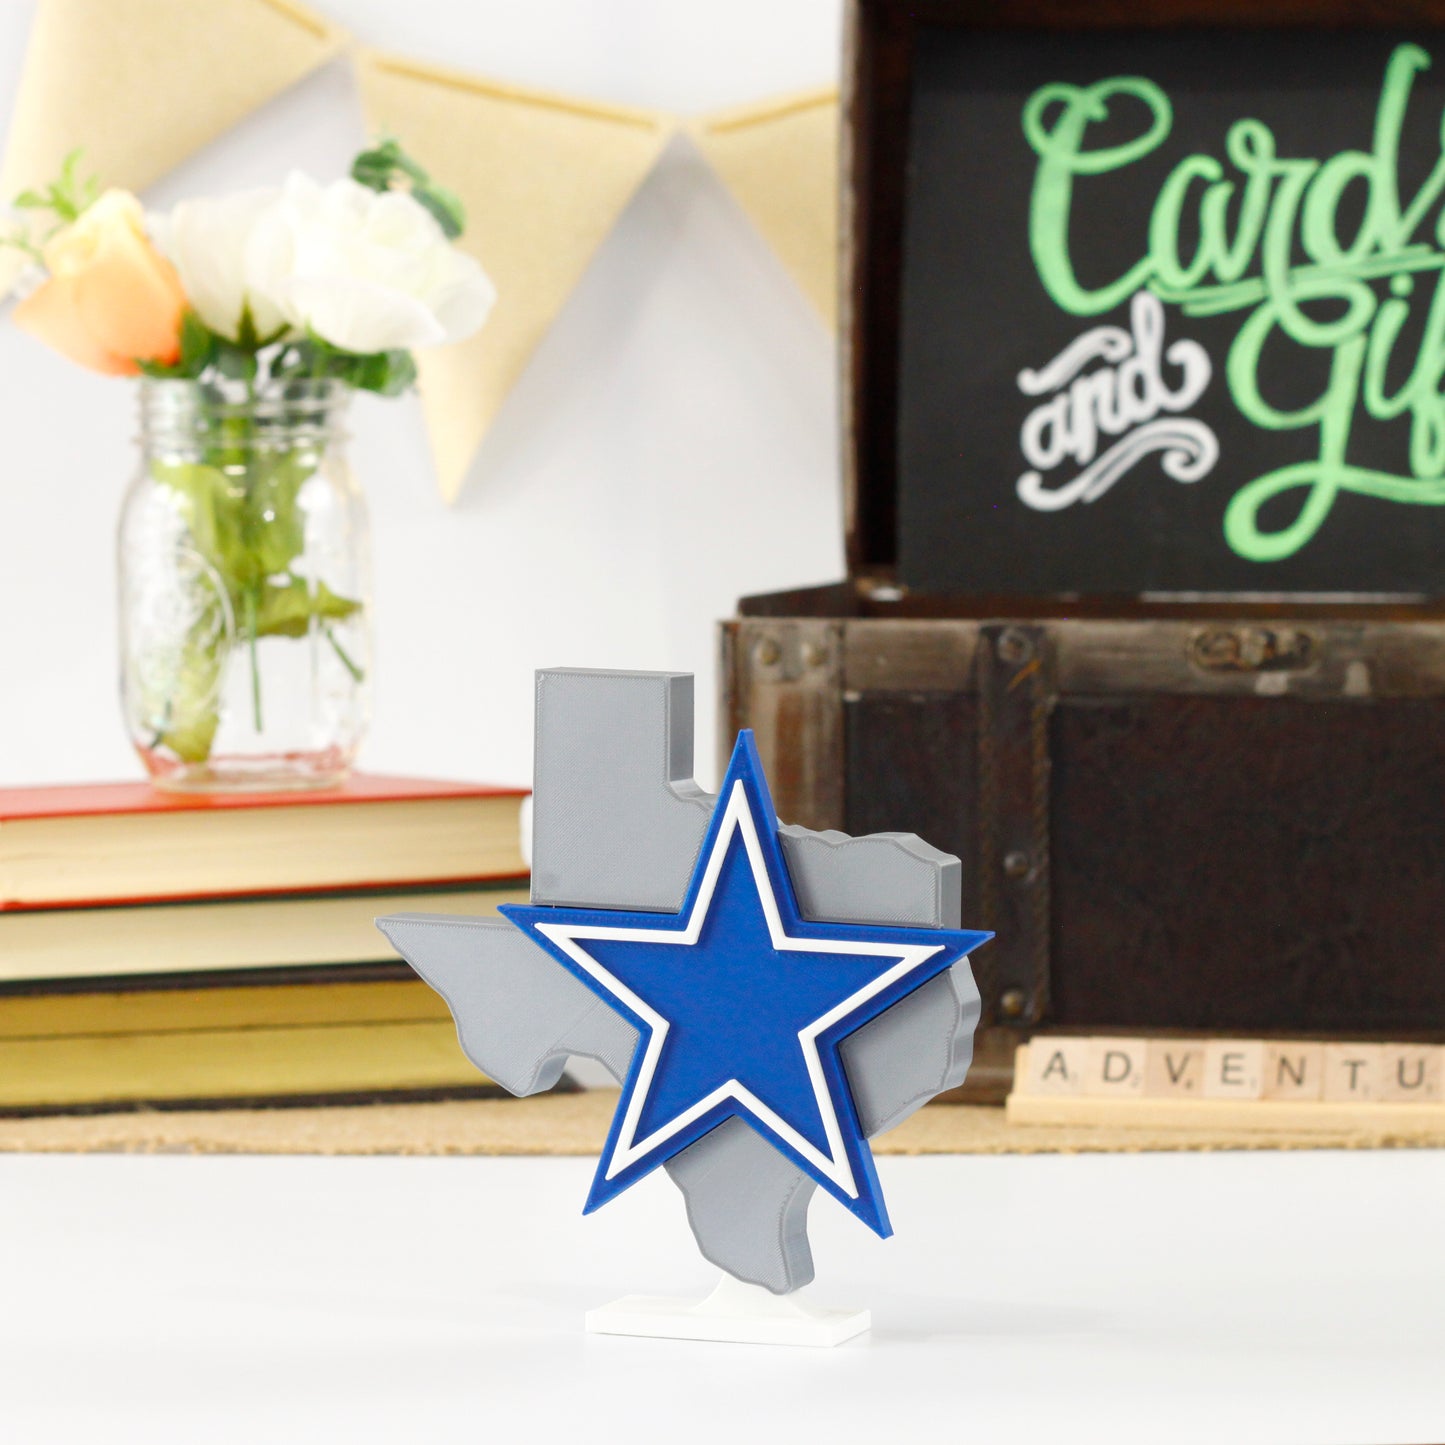 Dallas Cowboys 3D Printed Texas Star Decor